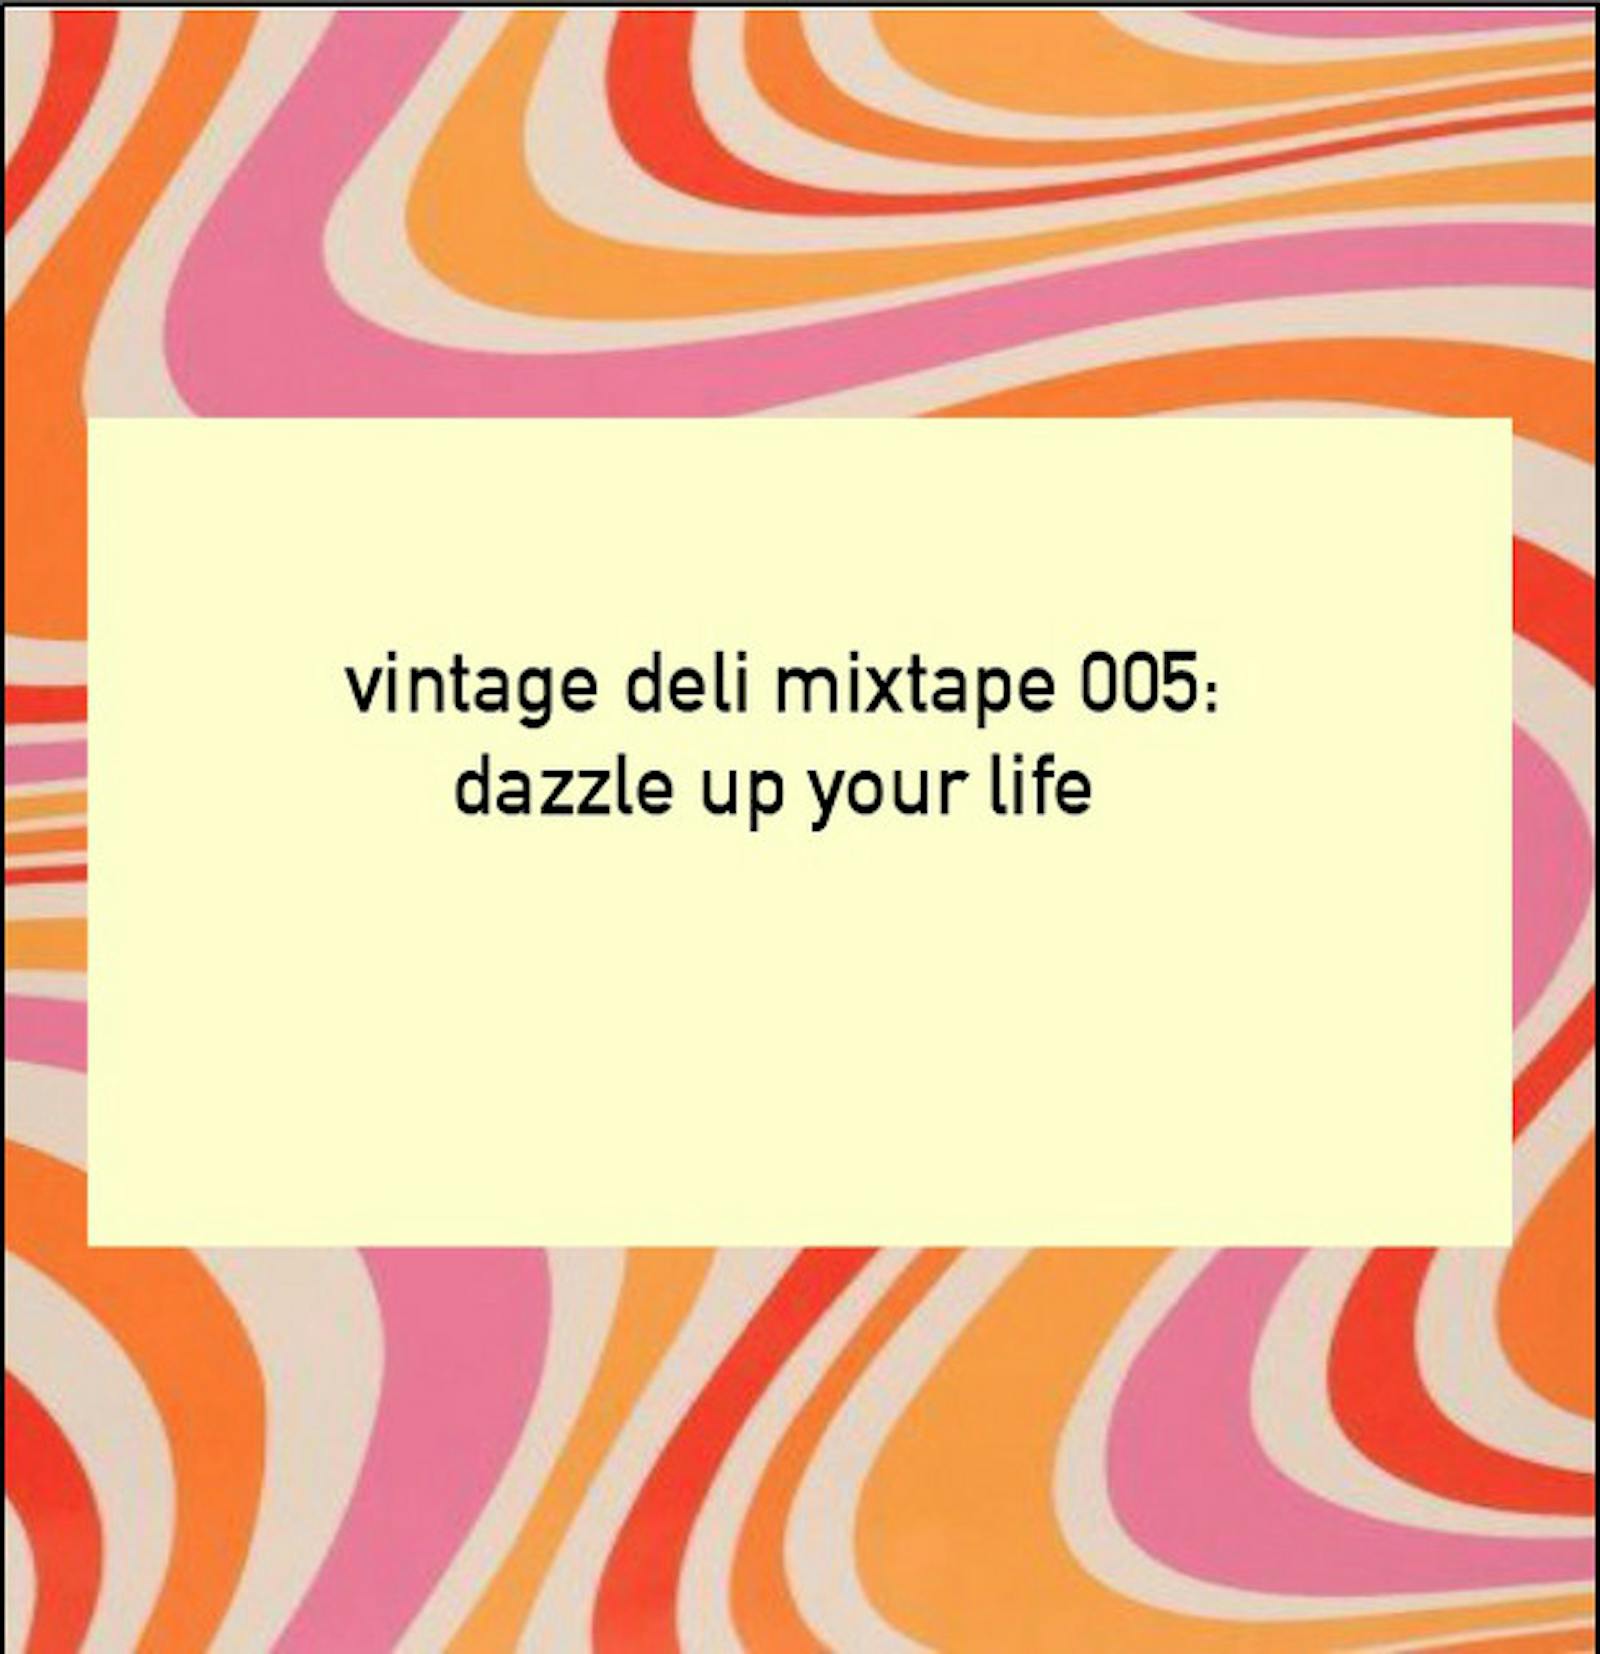 listen to the vintage deli mixtape 🎧🕺